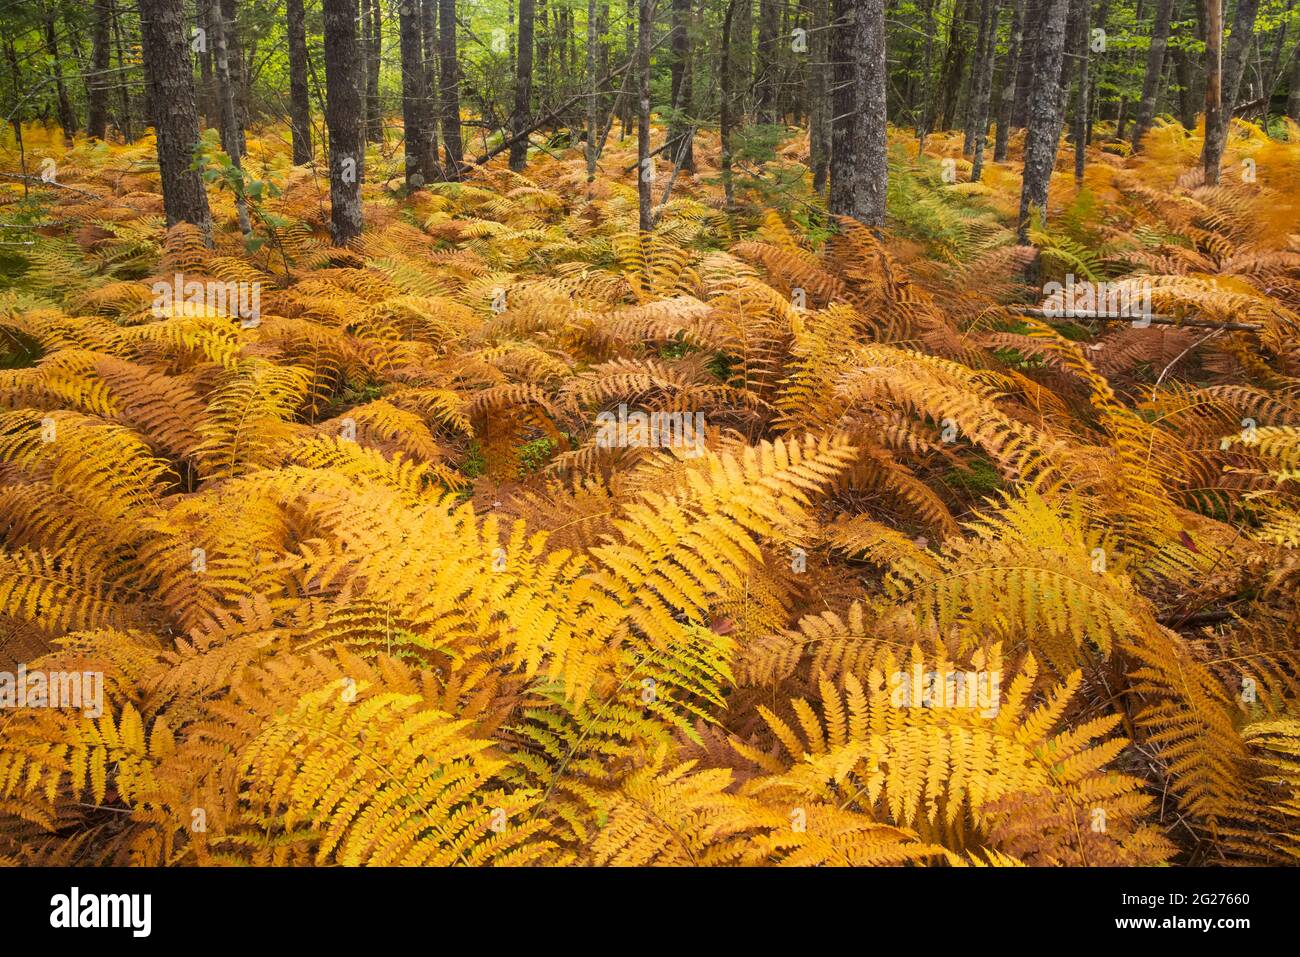 Ferns growing in a forest near Halifax, Nova Scotia, Canada. Stock Photo